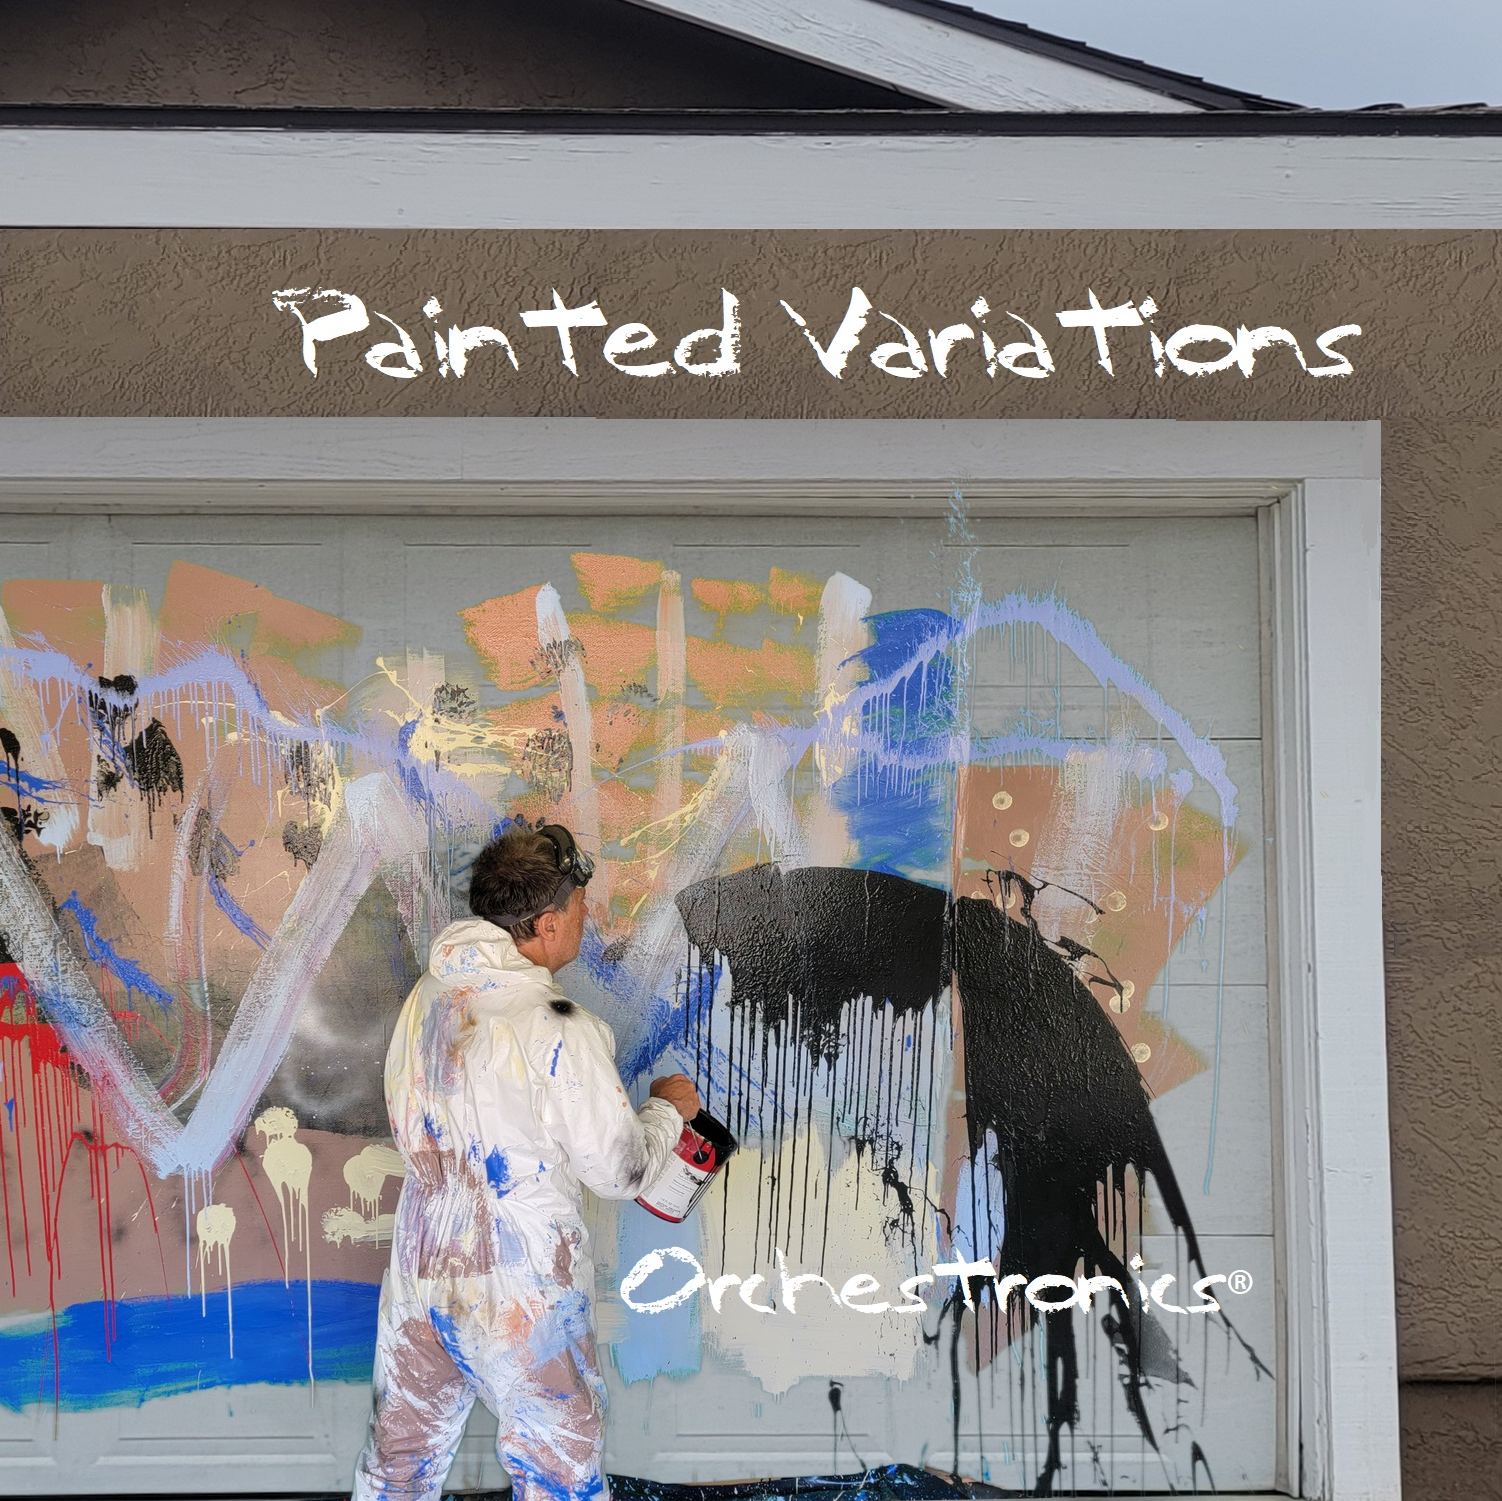 New Album: Painted Variations